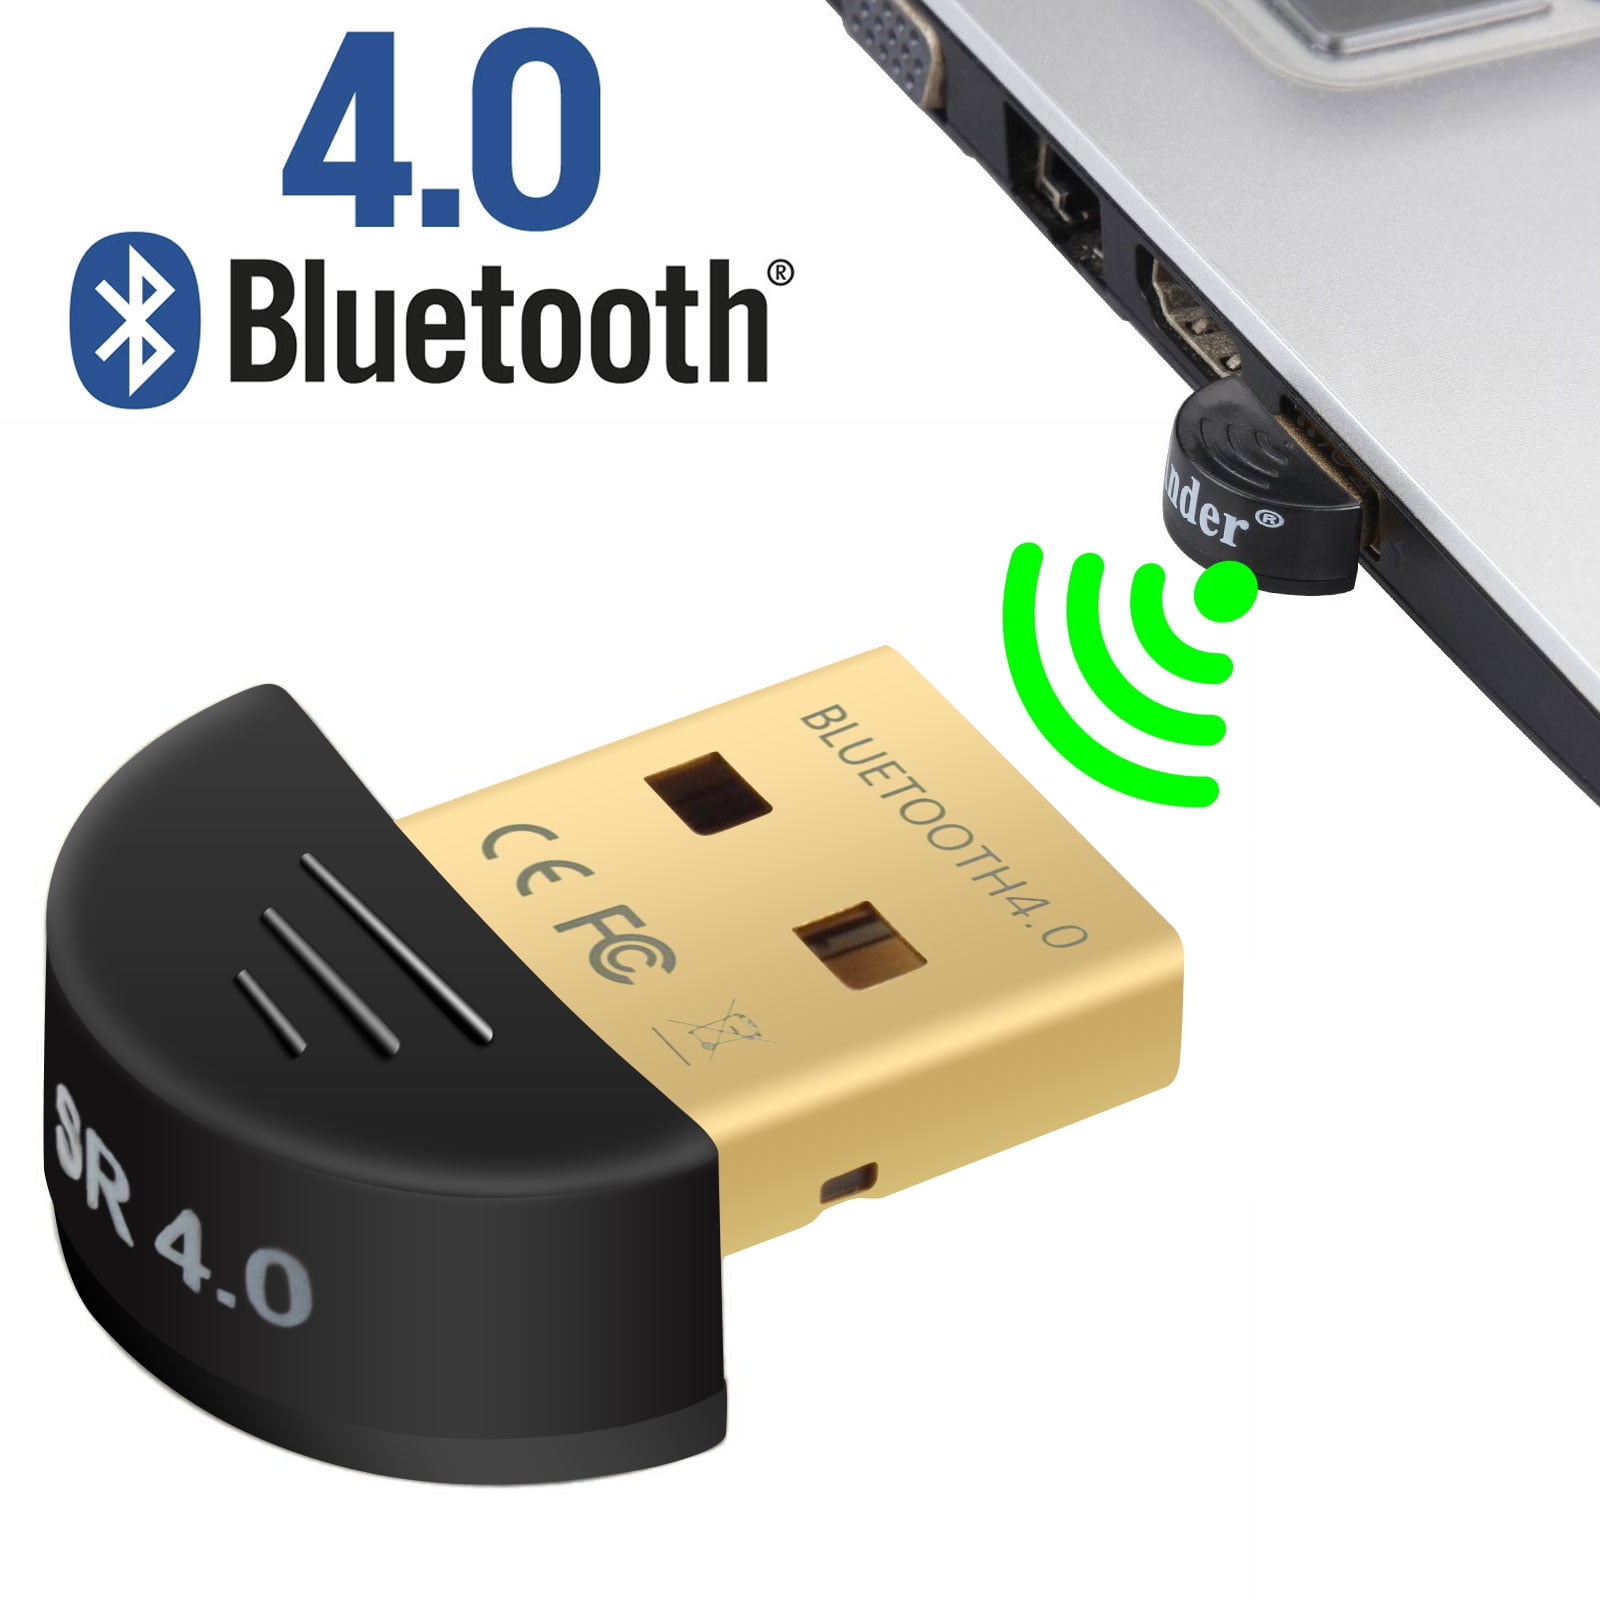 Amerteer Bluetooth 4.0 USB 2.0 CSR 4.0 Dongle Adapter for PC Laptop Win Vista 7 10,Black - Walmart.com